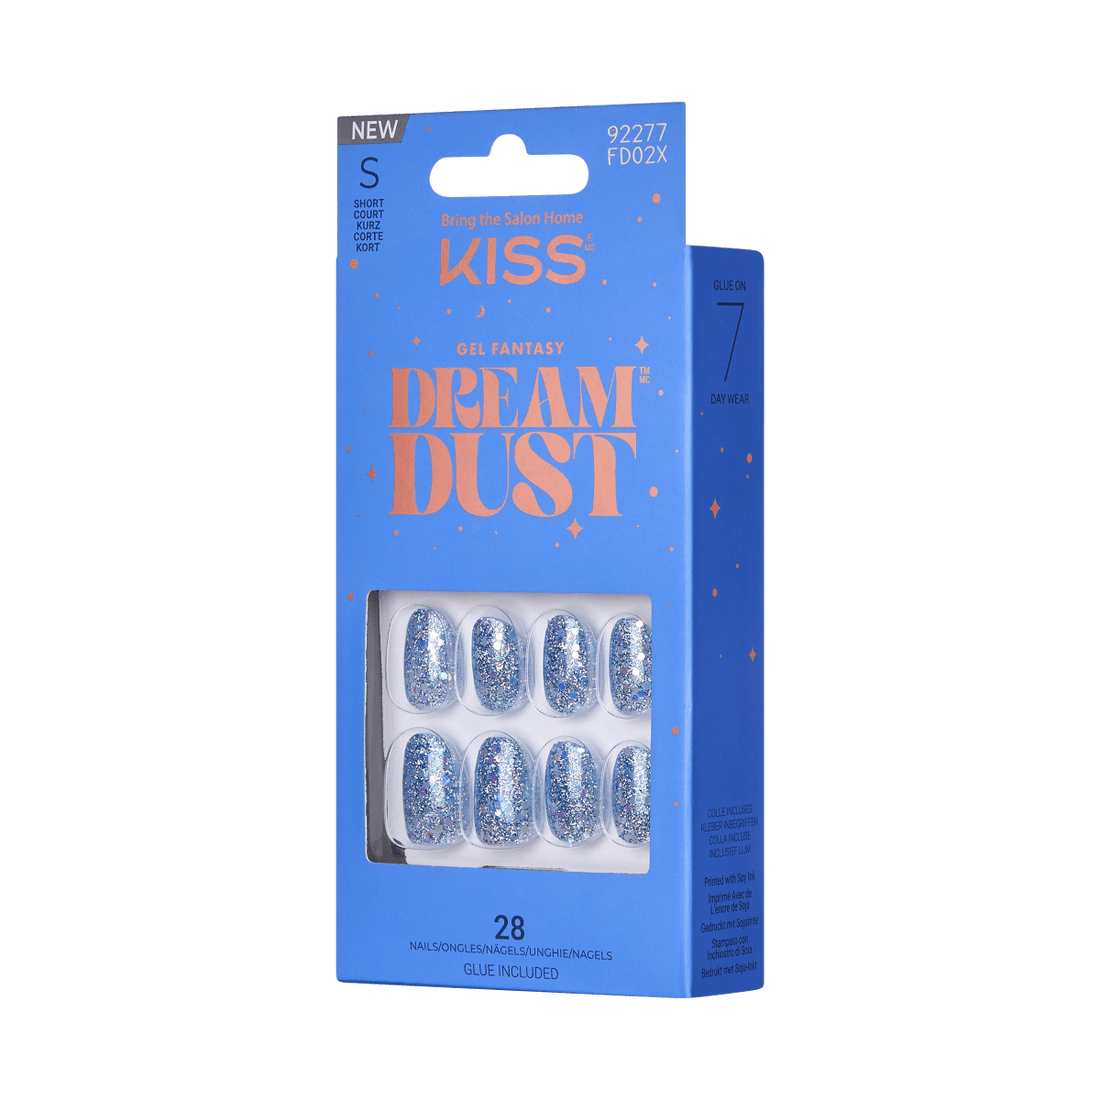 KISS Gel Fantasy Dreamdust, Press-On Nails, GRWM, Blue, Short Oval, 28ct